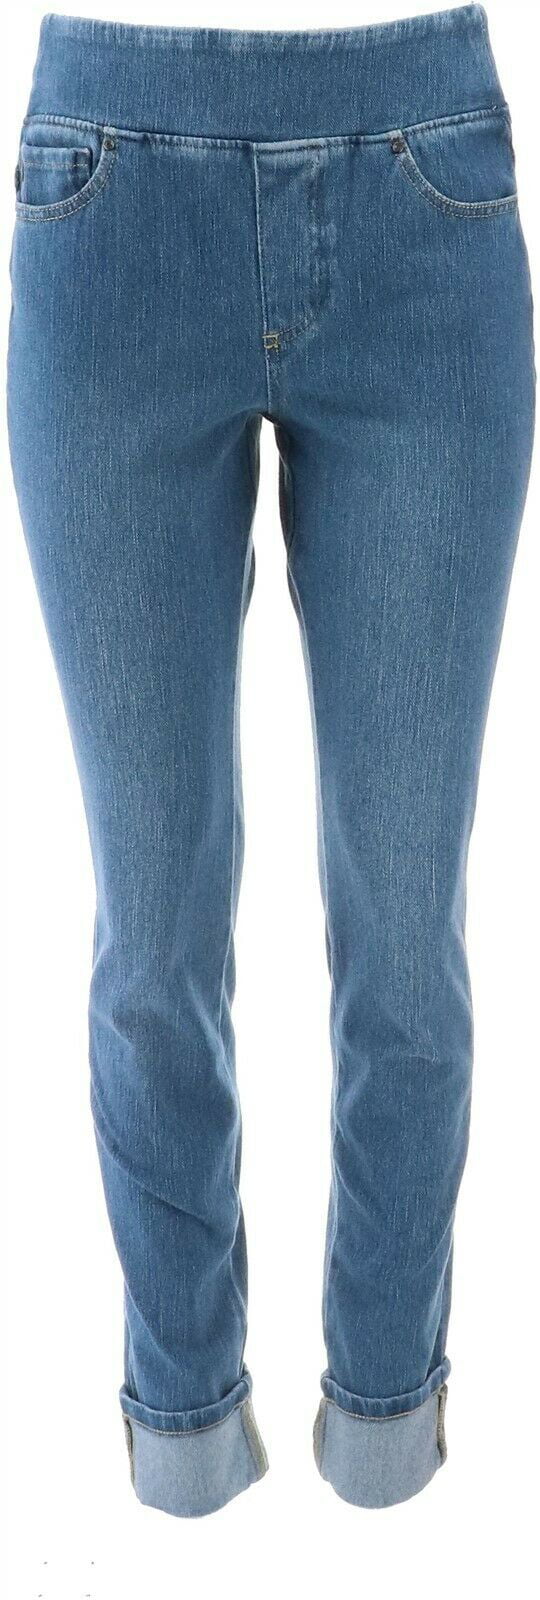 cuffed jeans womens